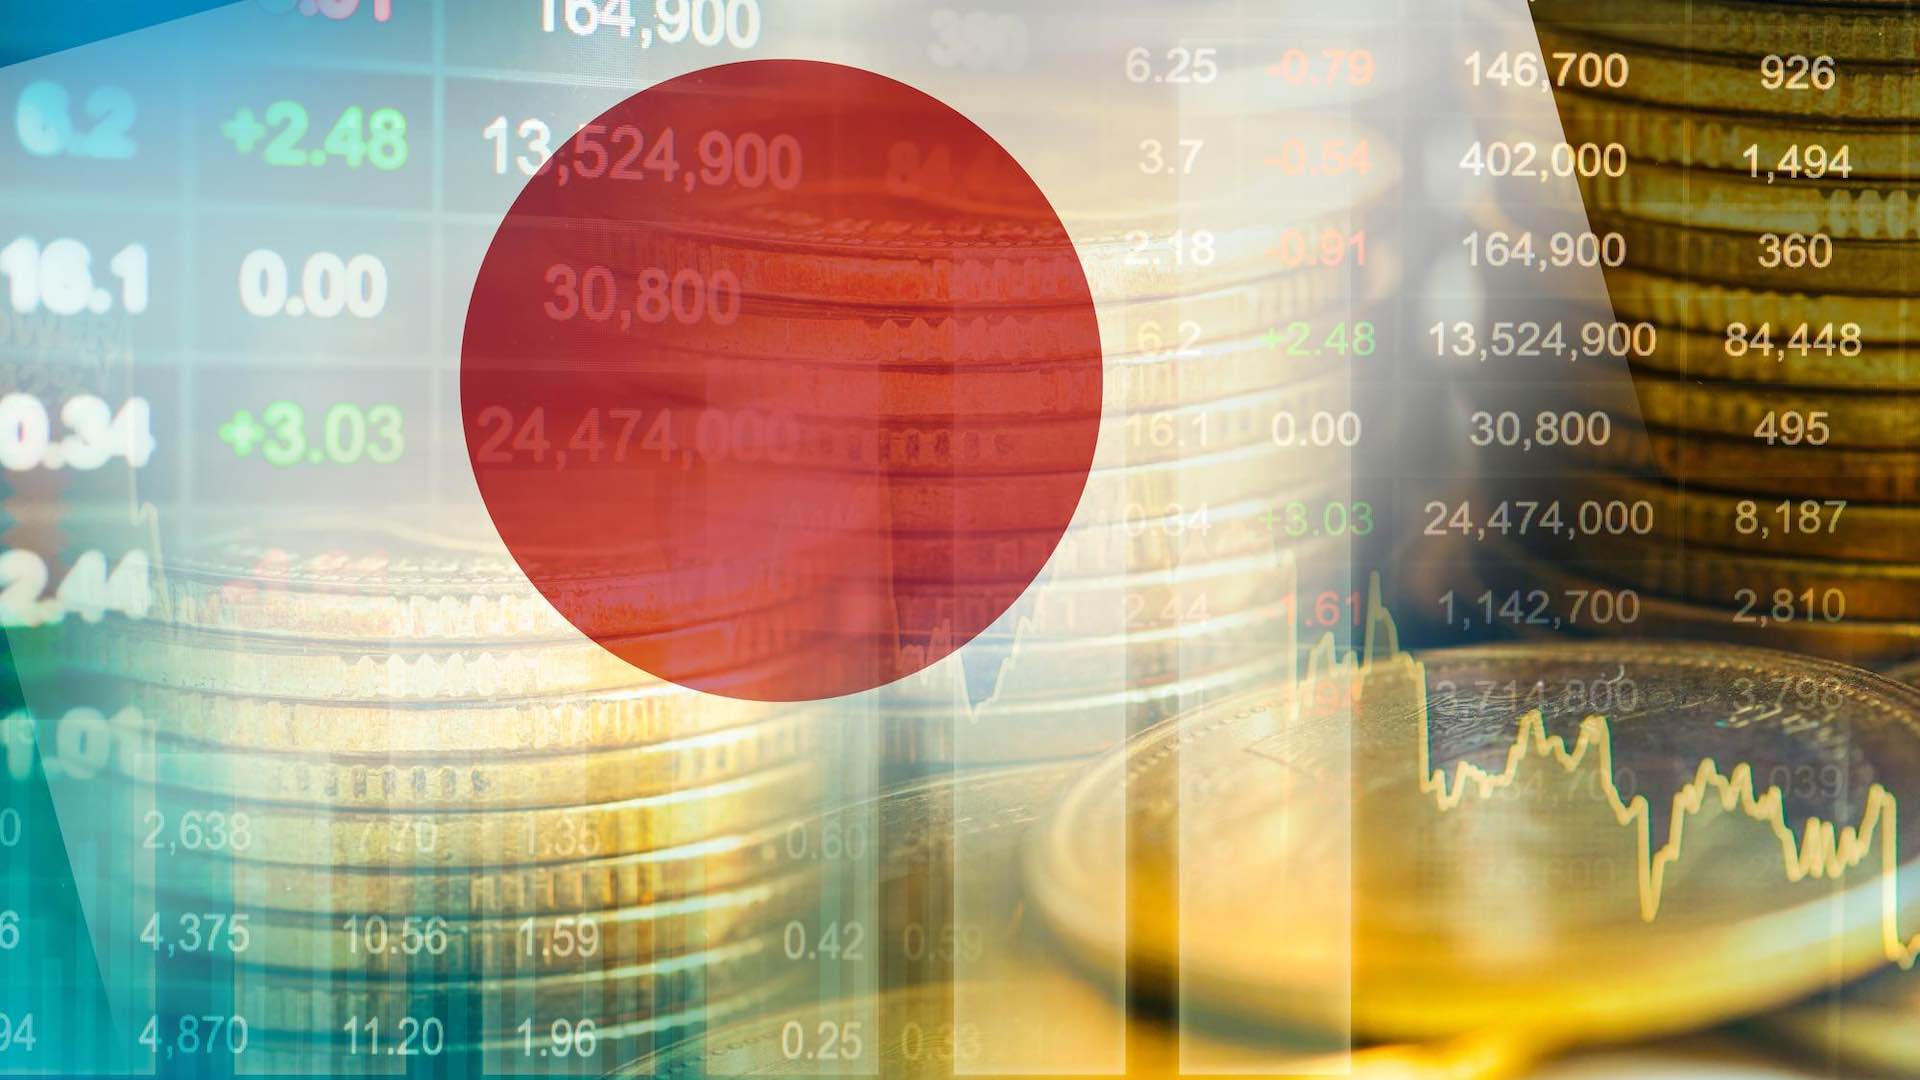 Japan rolls out $113 billion economic plan amid rising inflation